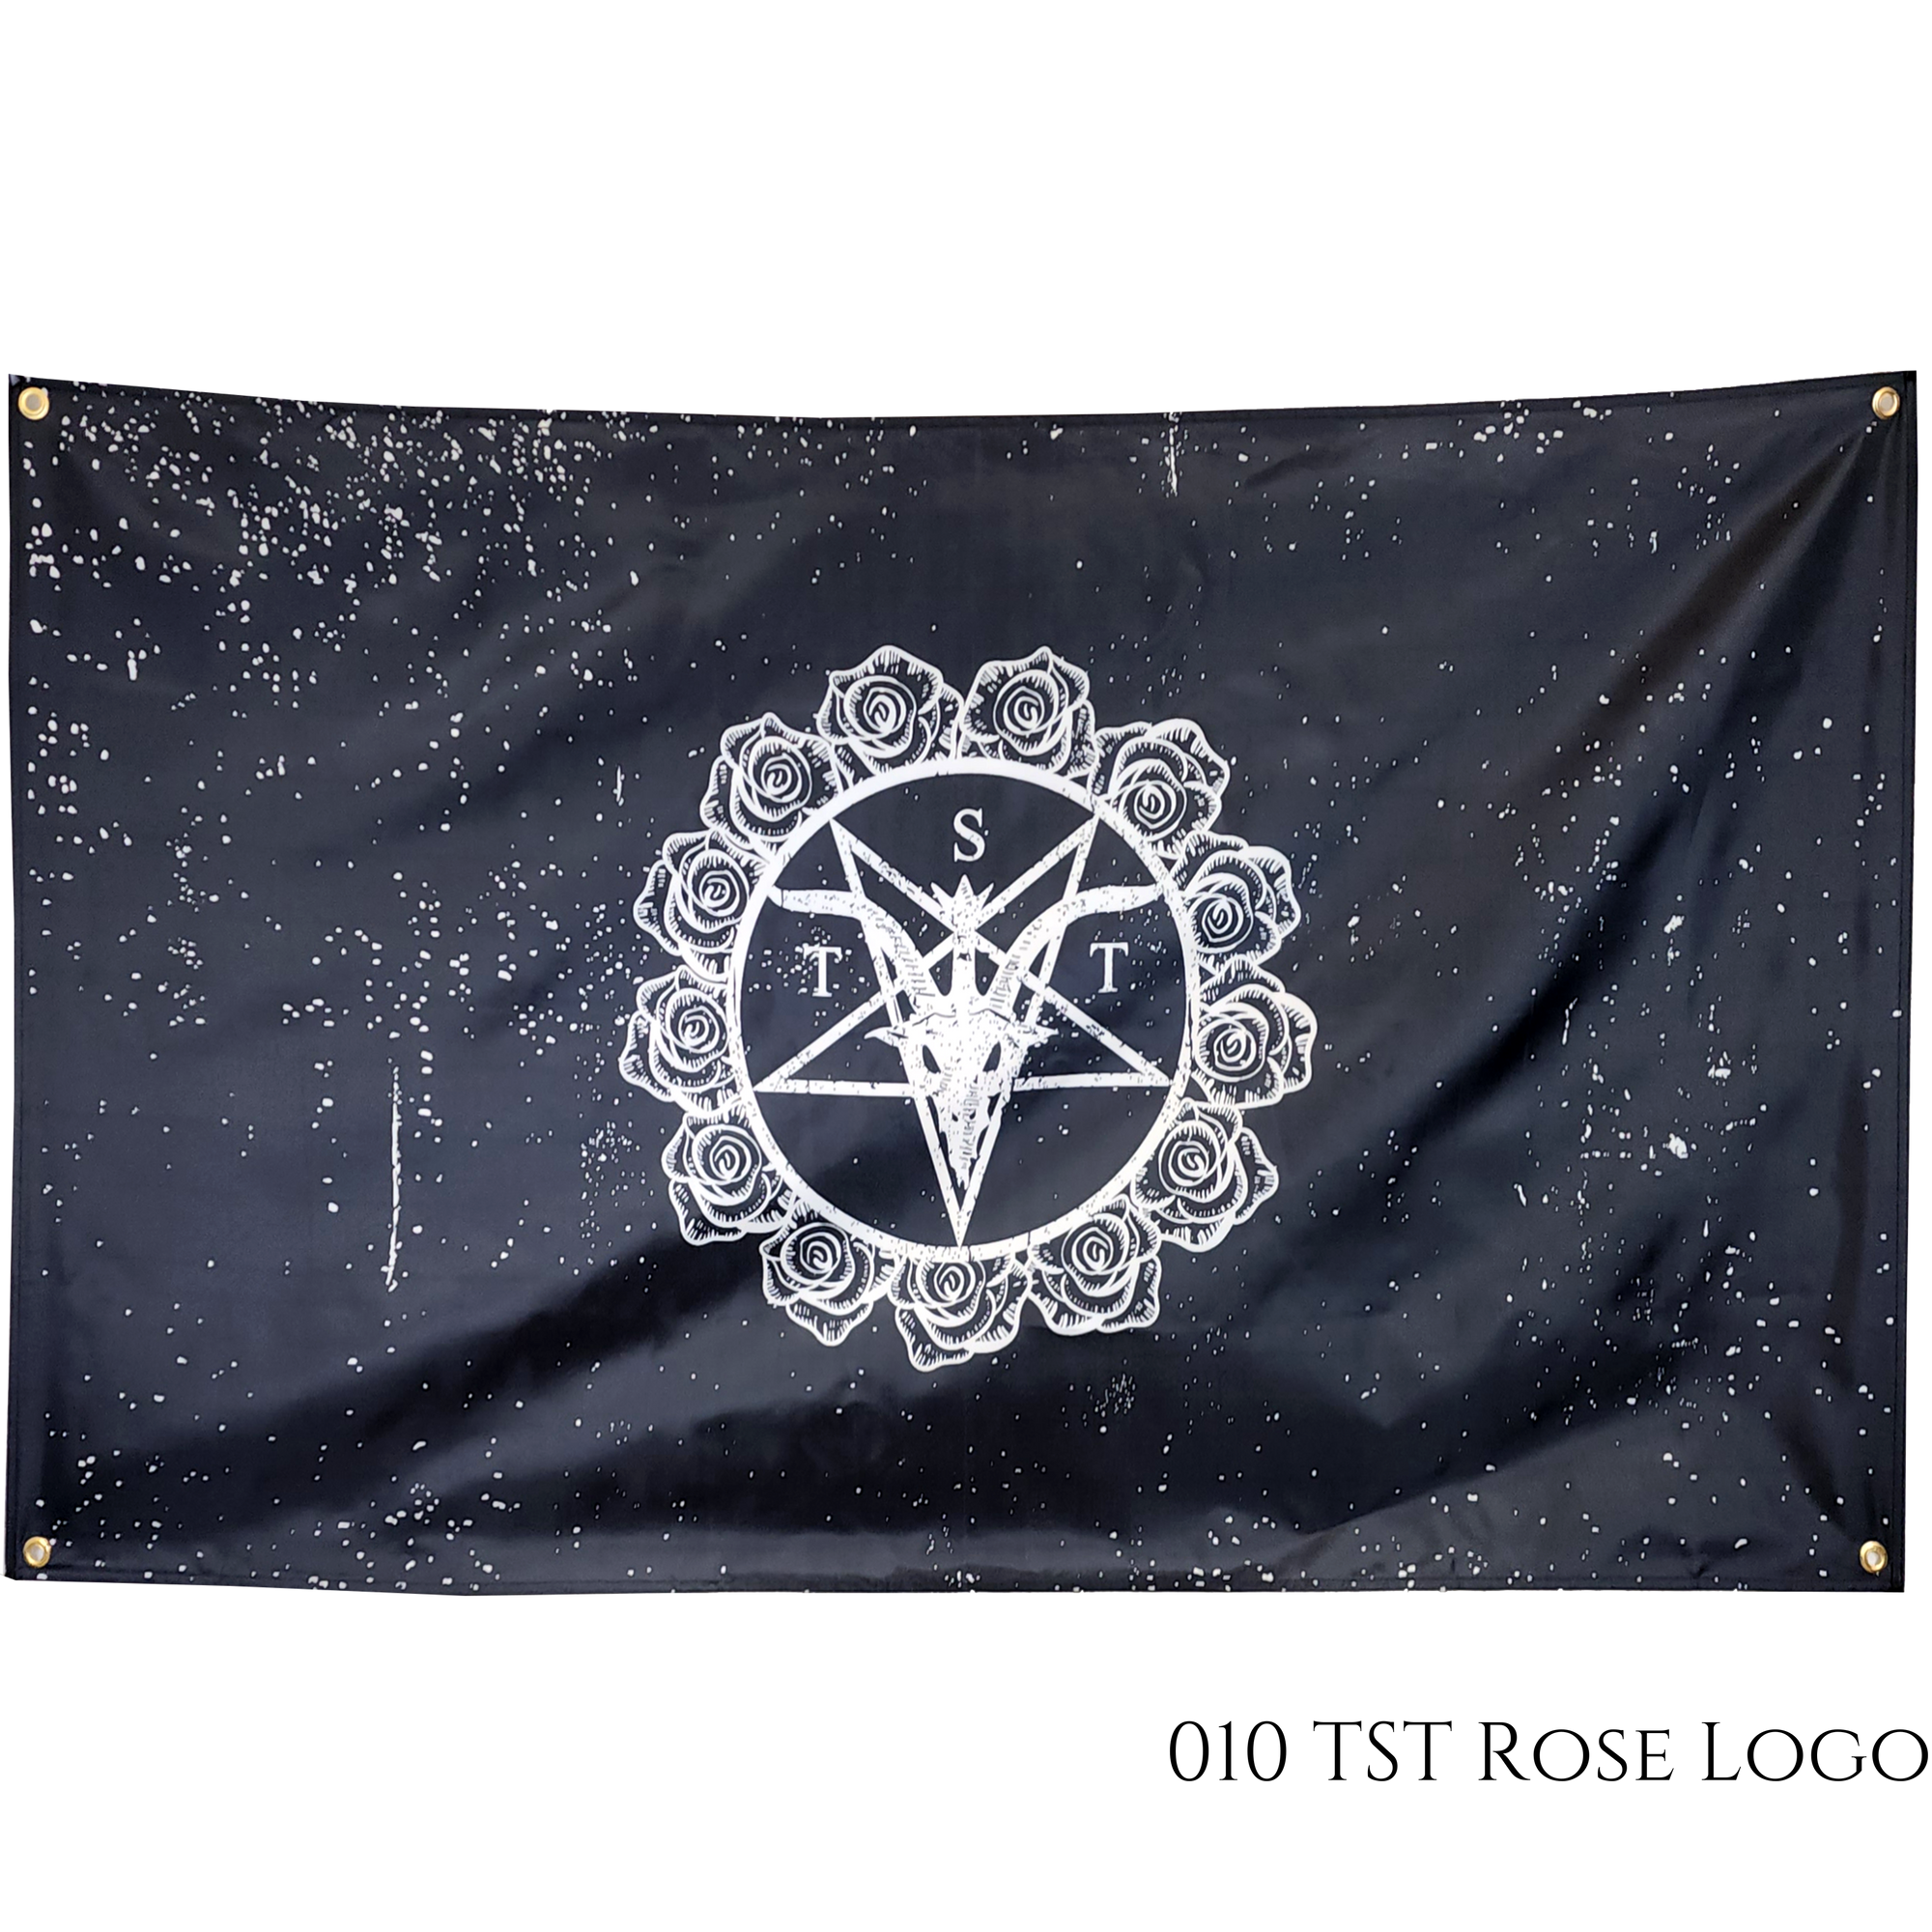 The Satanic Temple Flags